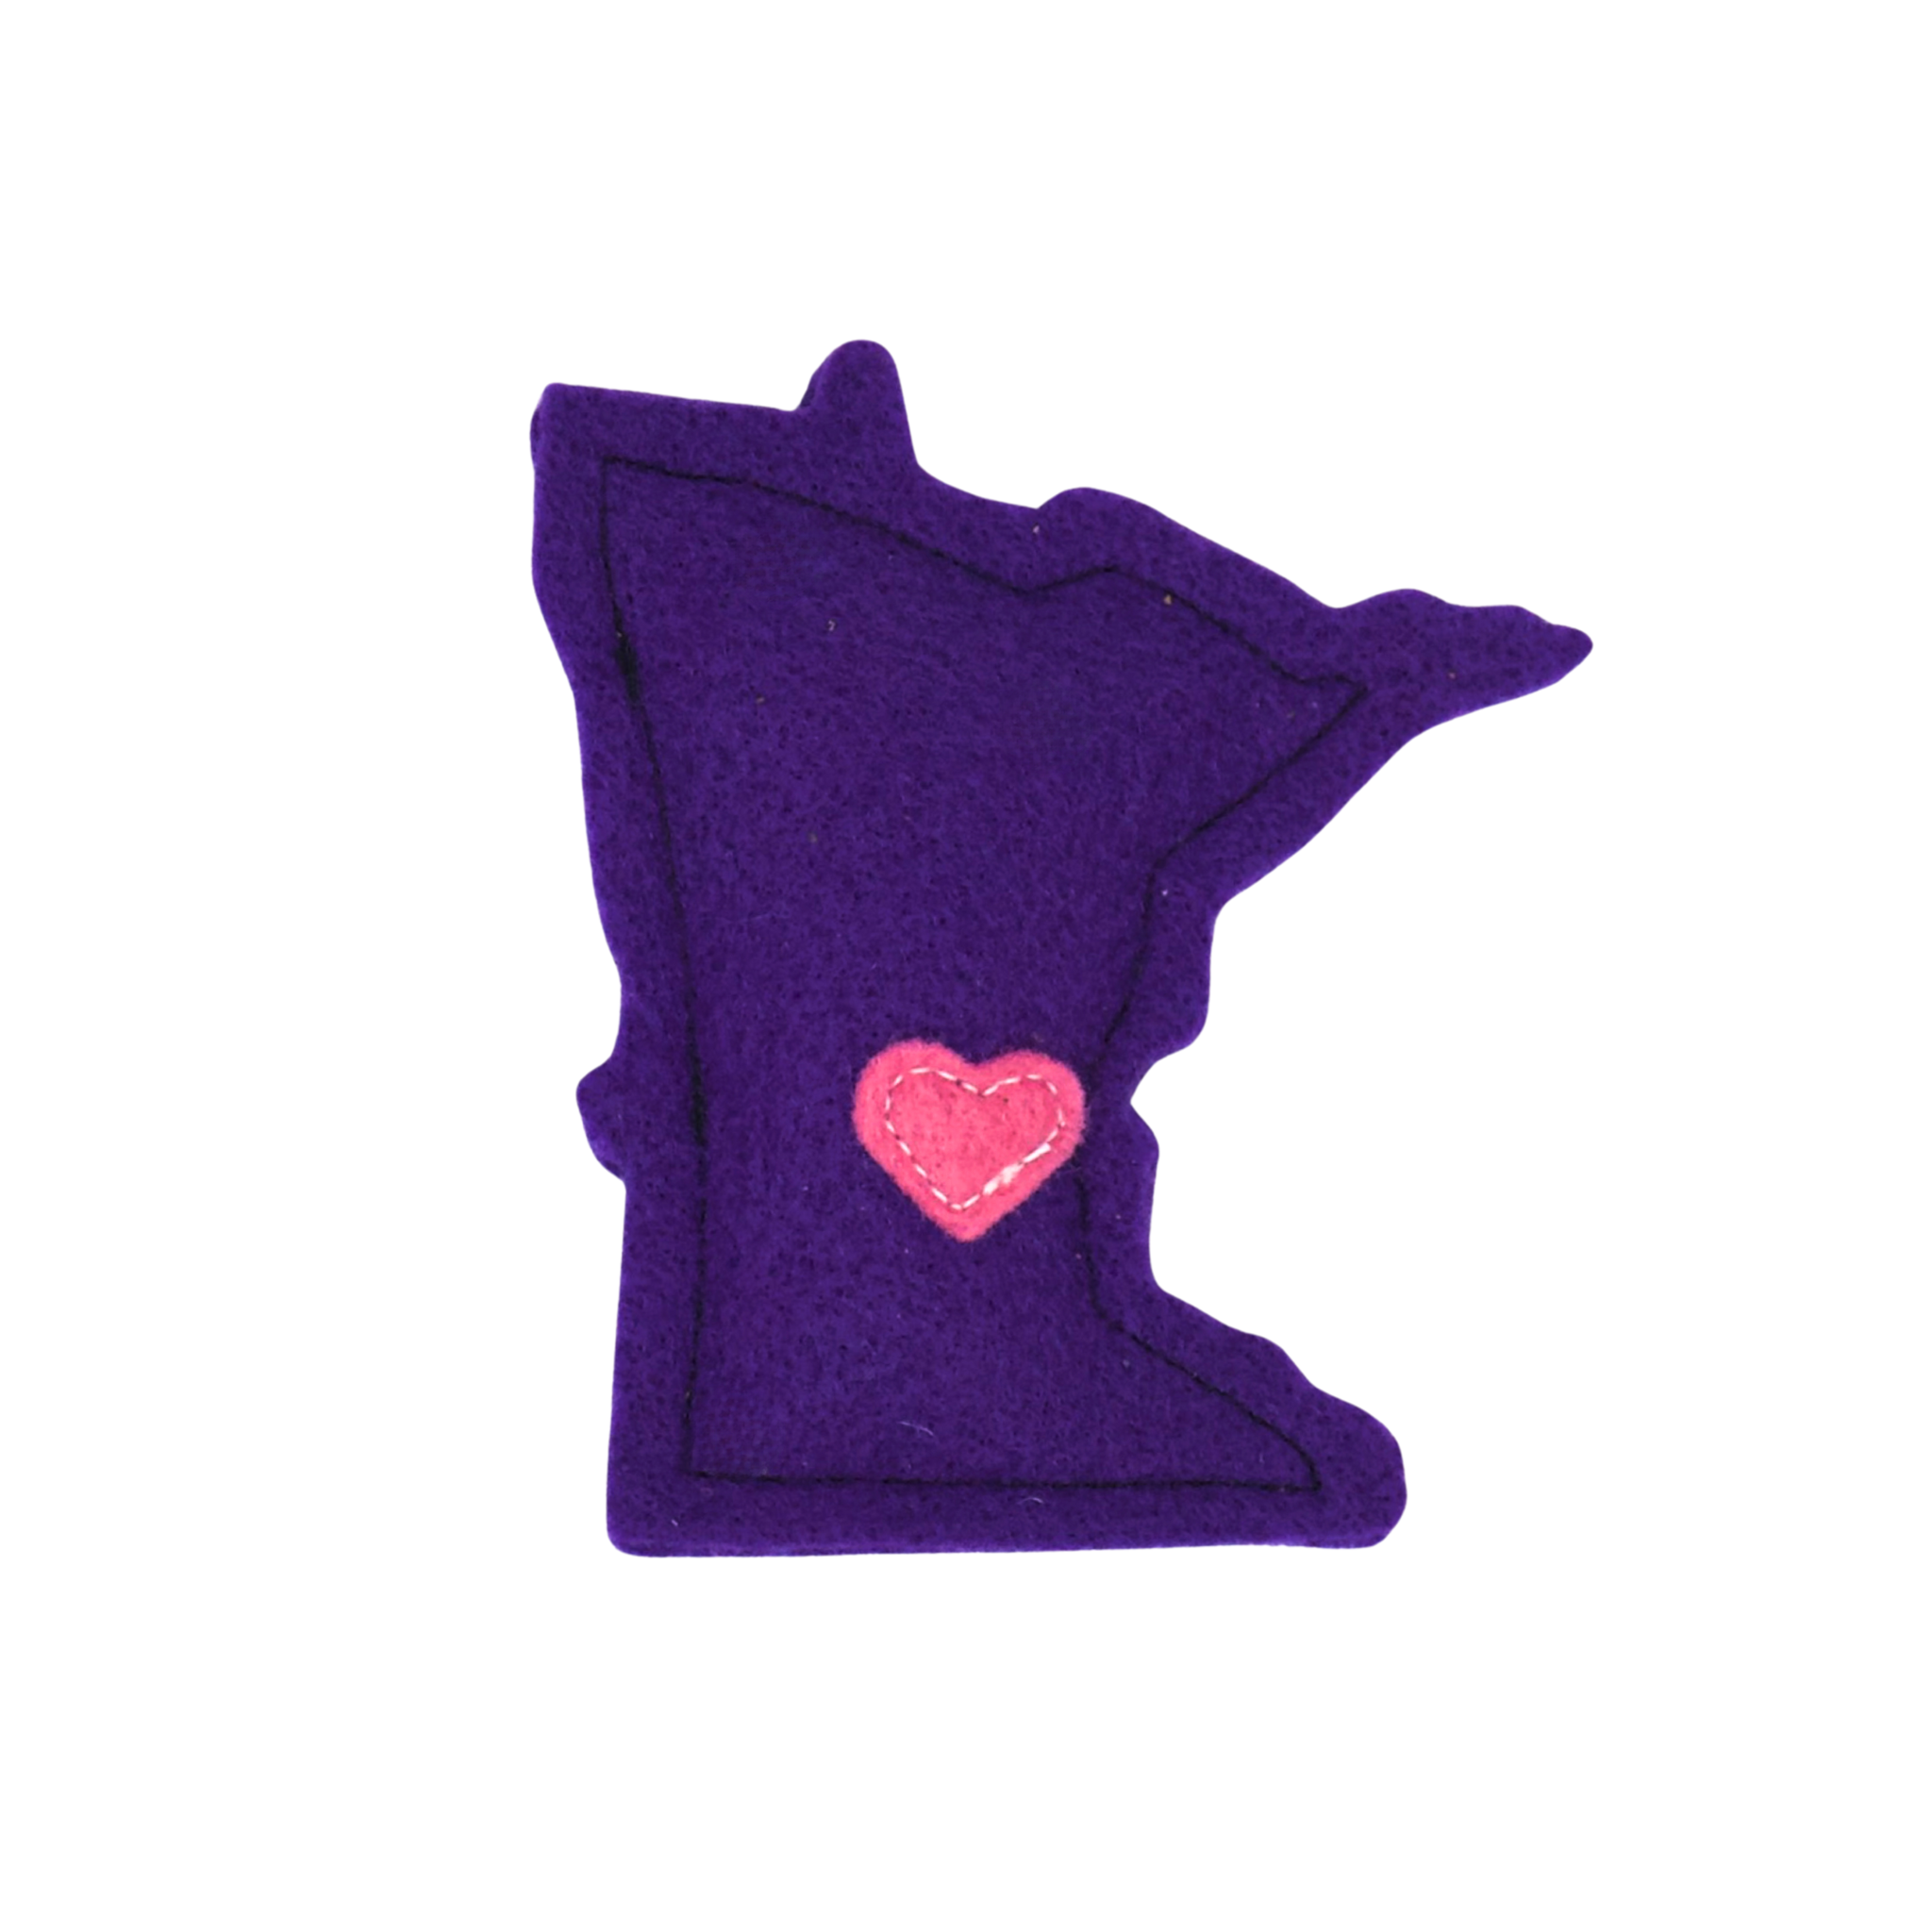 Minnesota Purple - Felt Catnip Toy